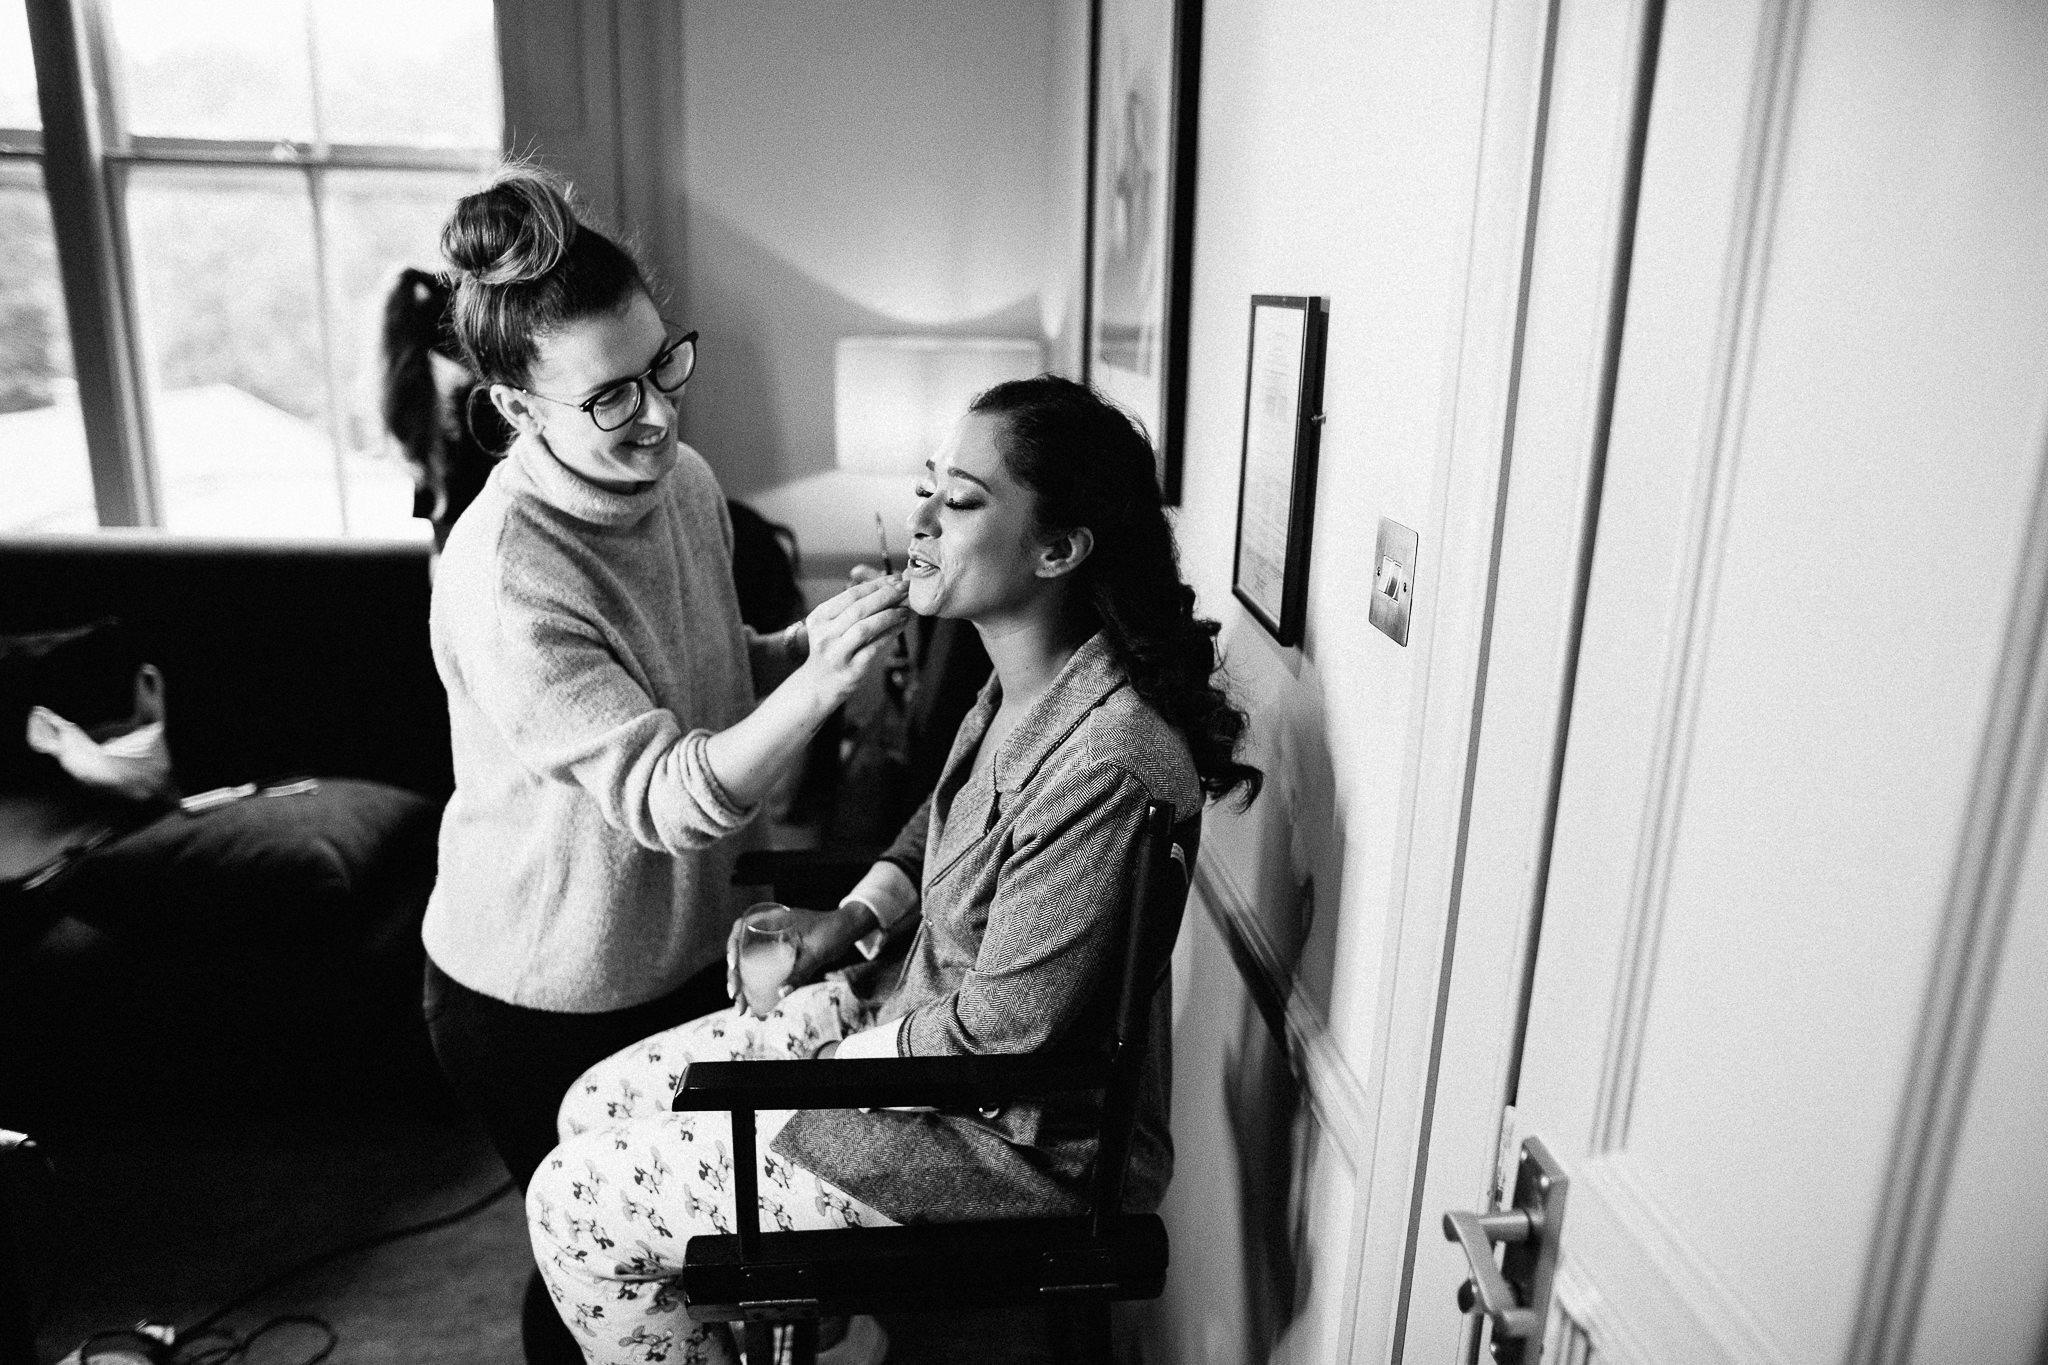  Makeup artist applies makeup to the Bride at Coulsdon Manor Hotel 